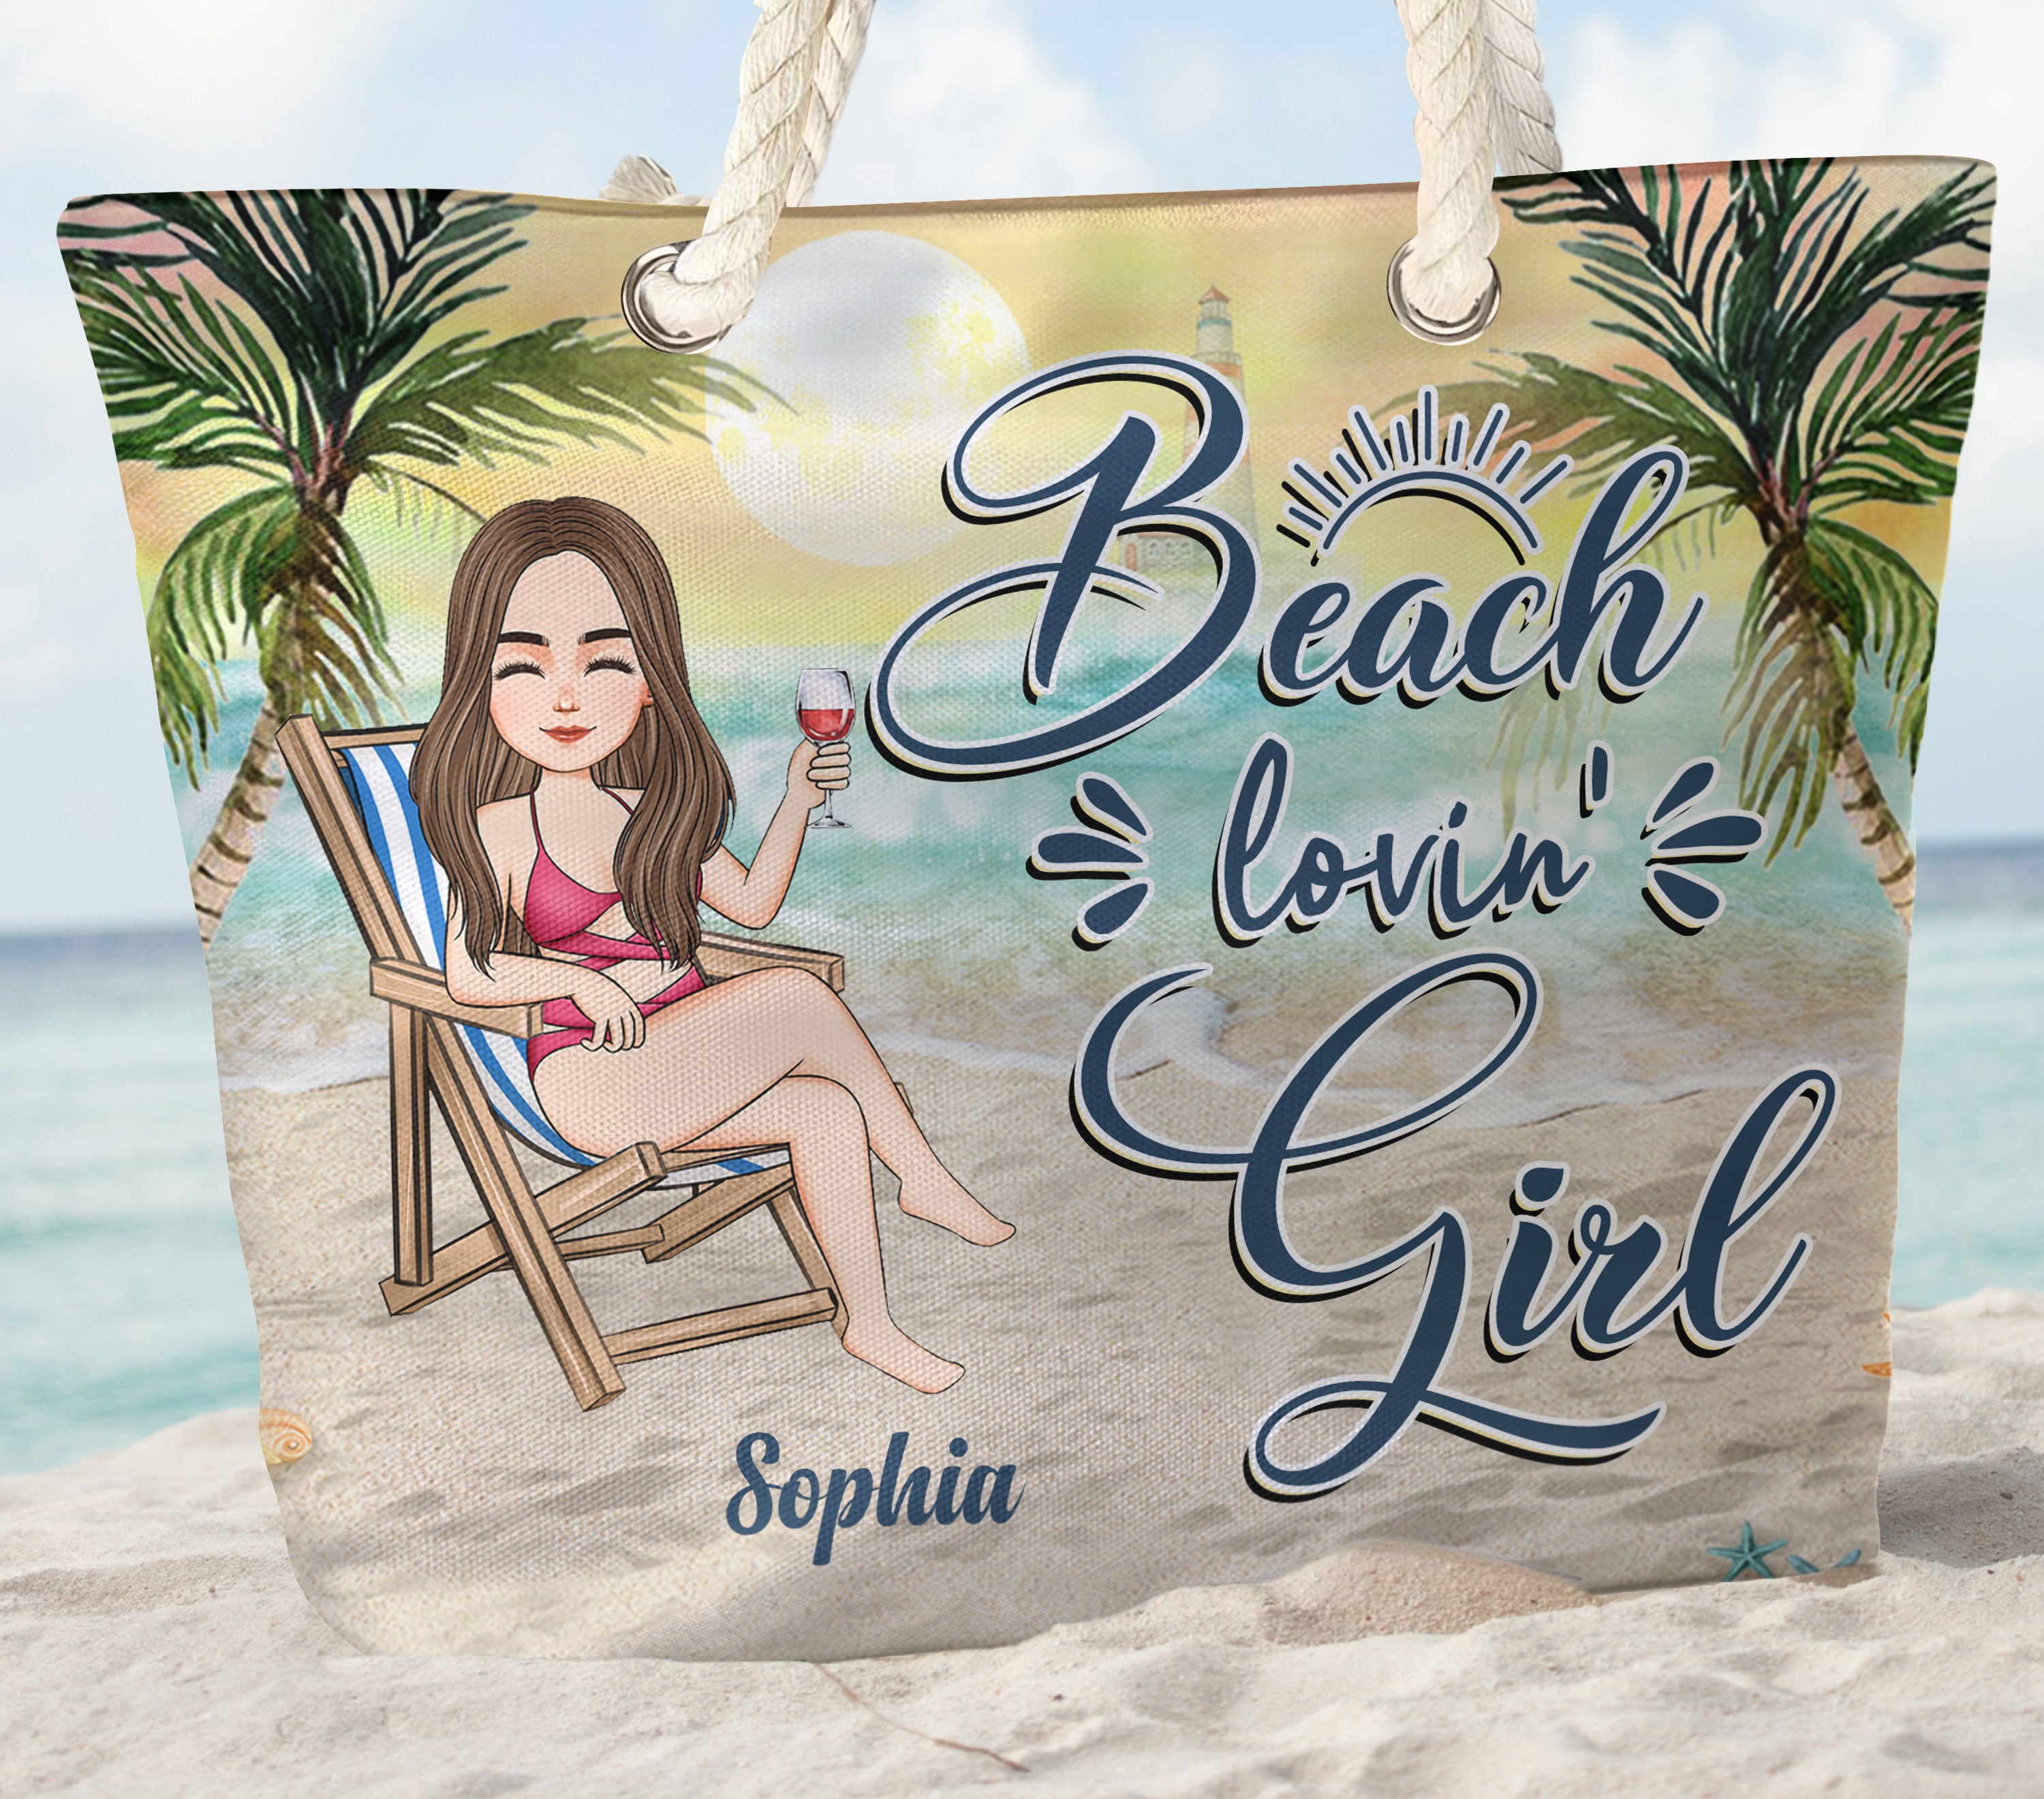 Beach Lovin' Girl - Personalized Beach Bag